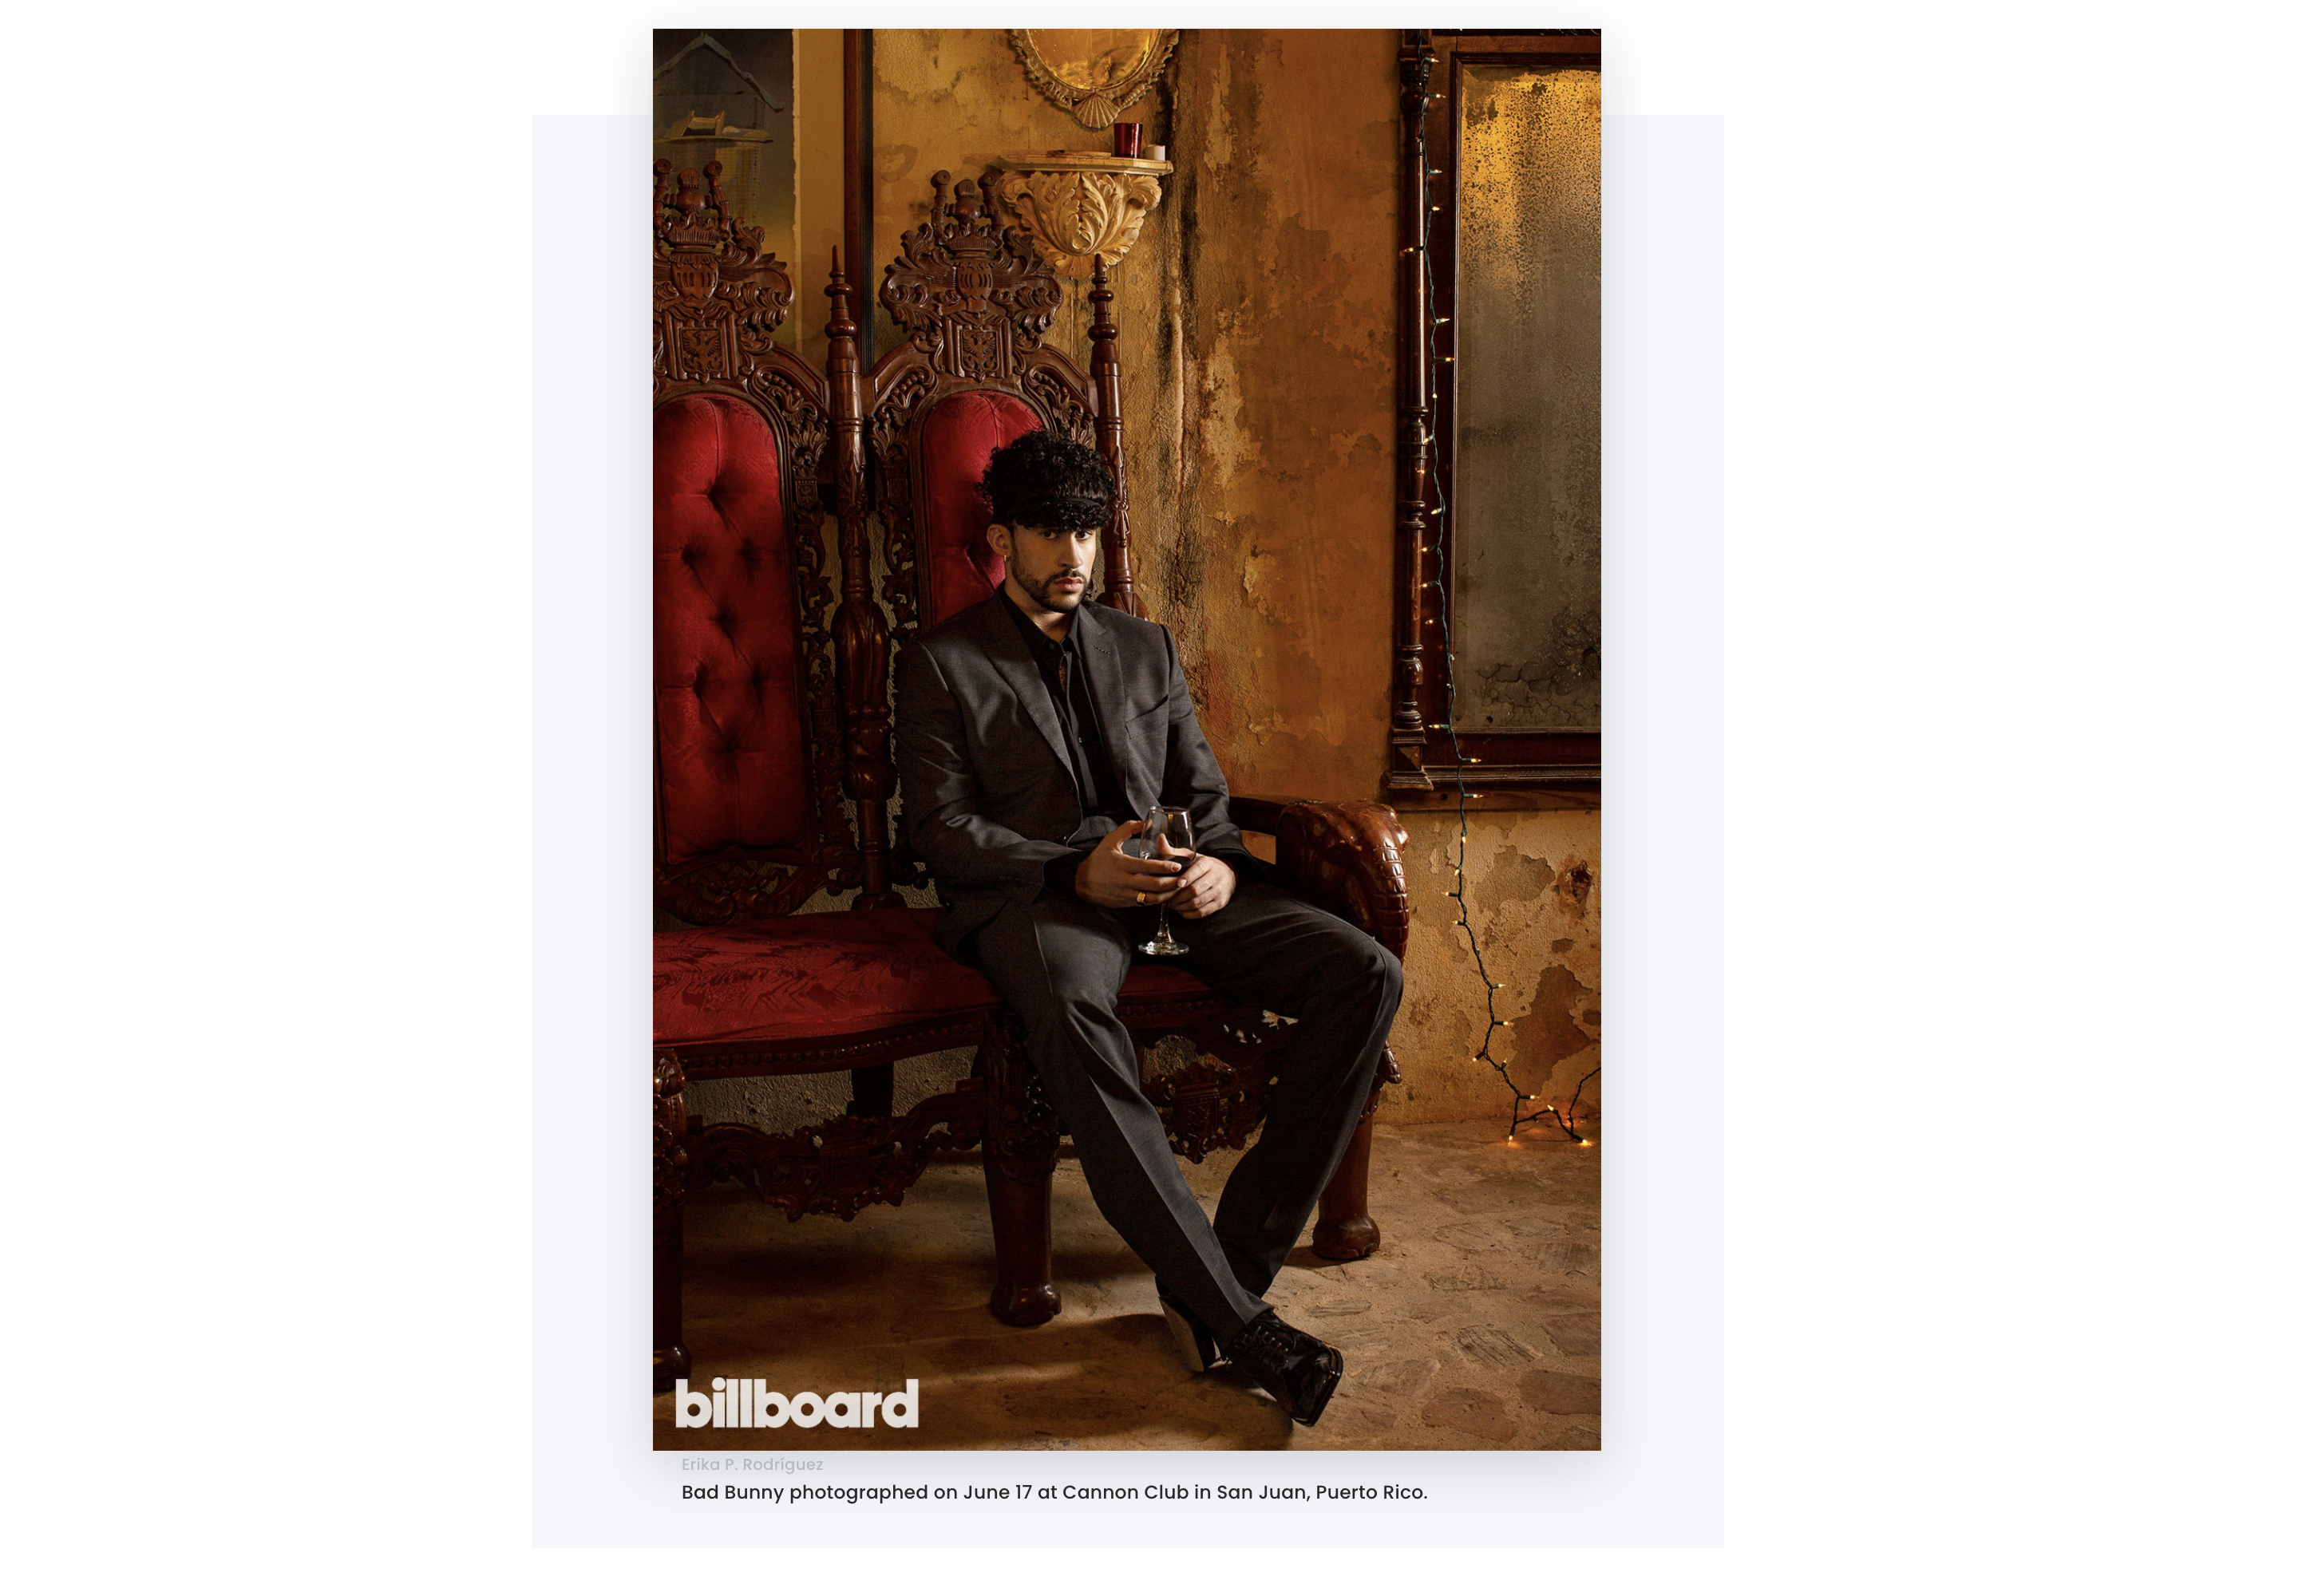 For Billboard: Bad Bunny & Tommy Torres